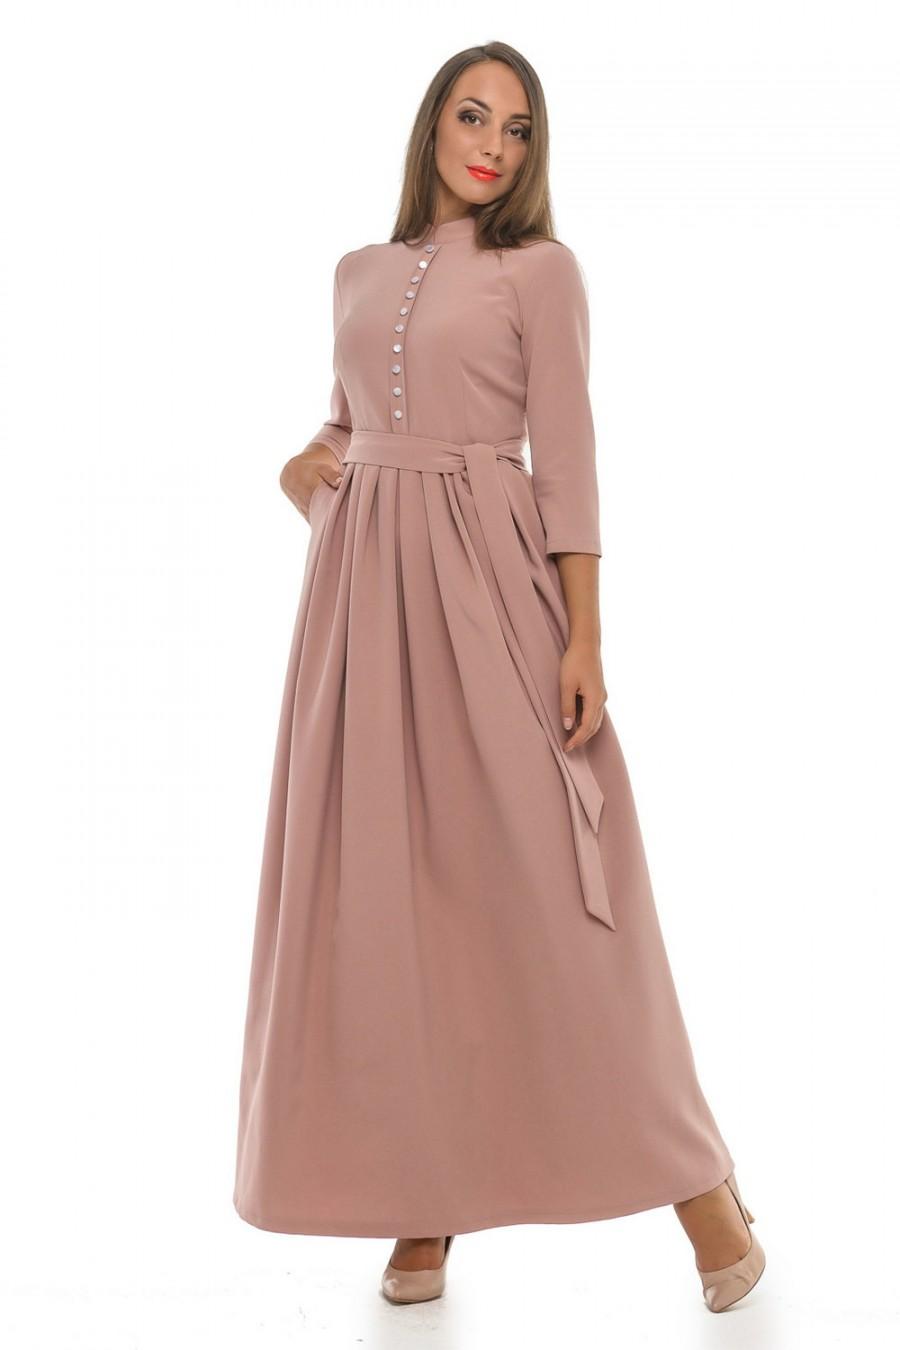 Hochzeit - Very soft Beige dress, Long dress with pleats, Formal Maxi dress, Mother of the bride dress, long sleeve maxi dress.